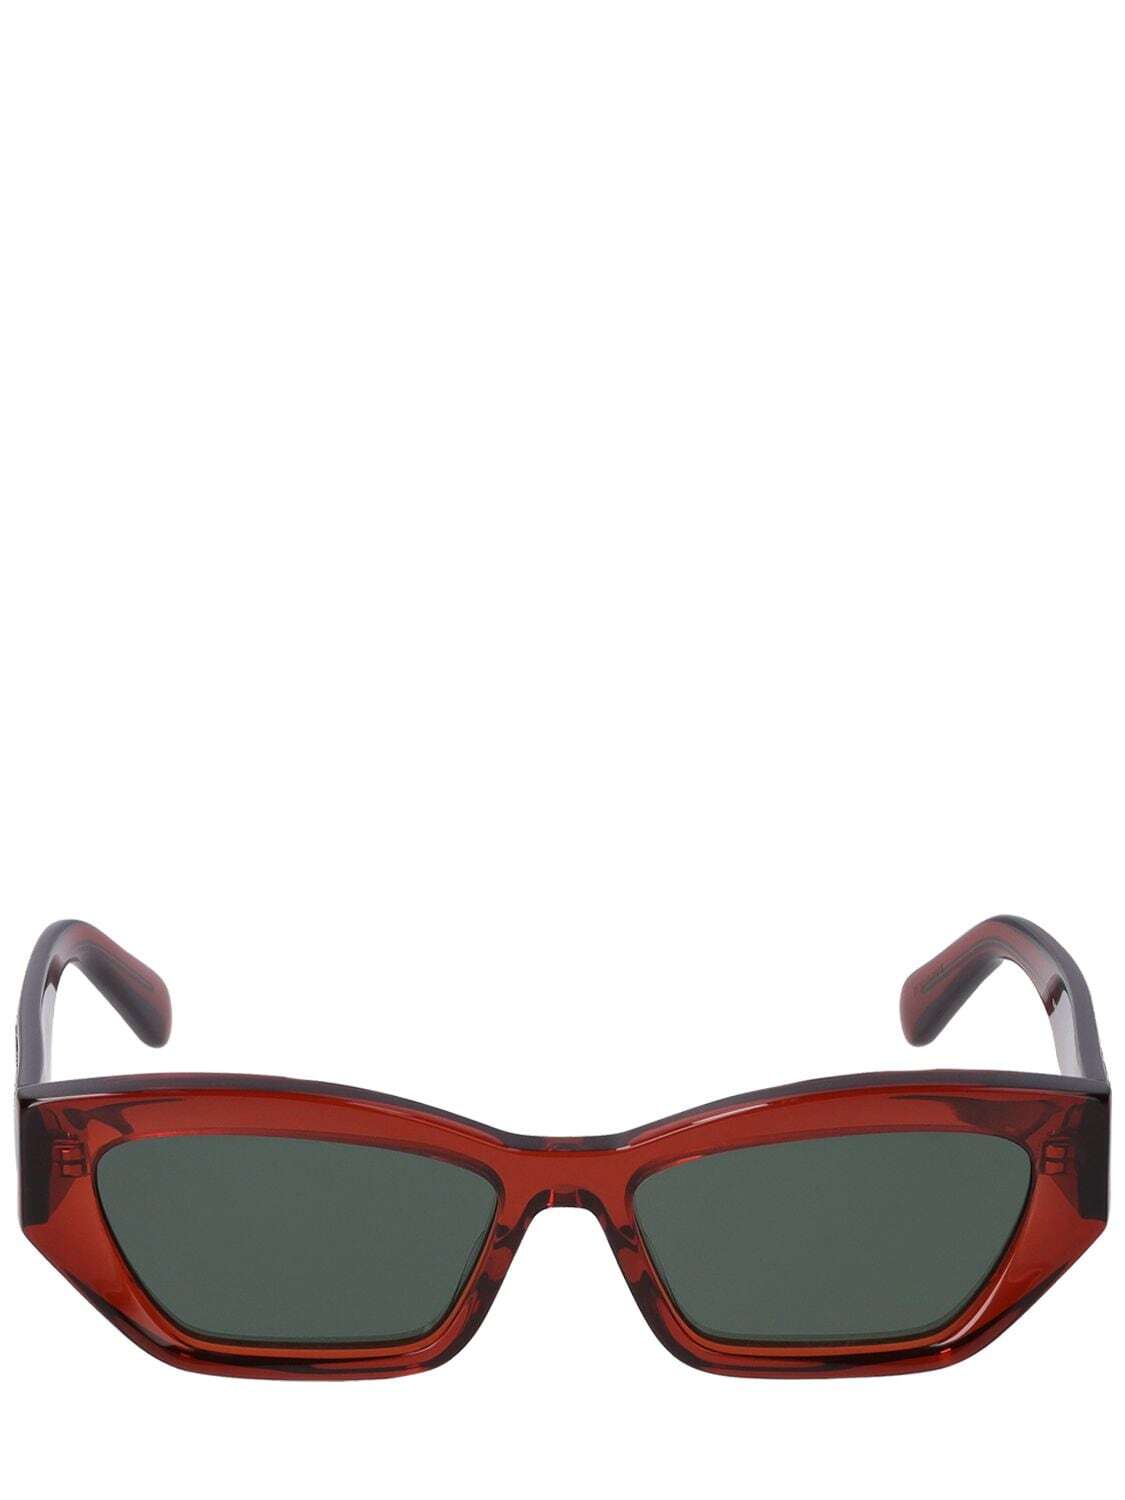 STELLA MCCARTNEY Cat-eye Bio-acetate Sunglasses W/ Chain in brown / green